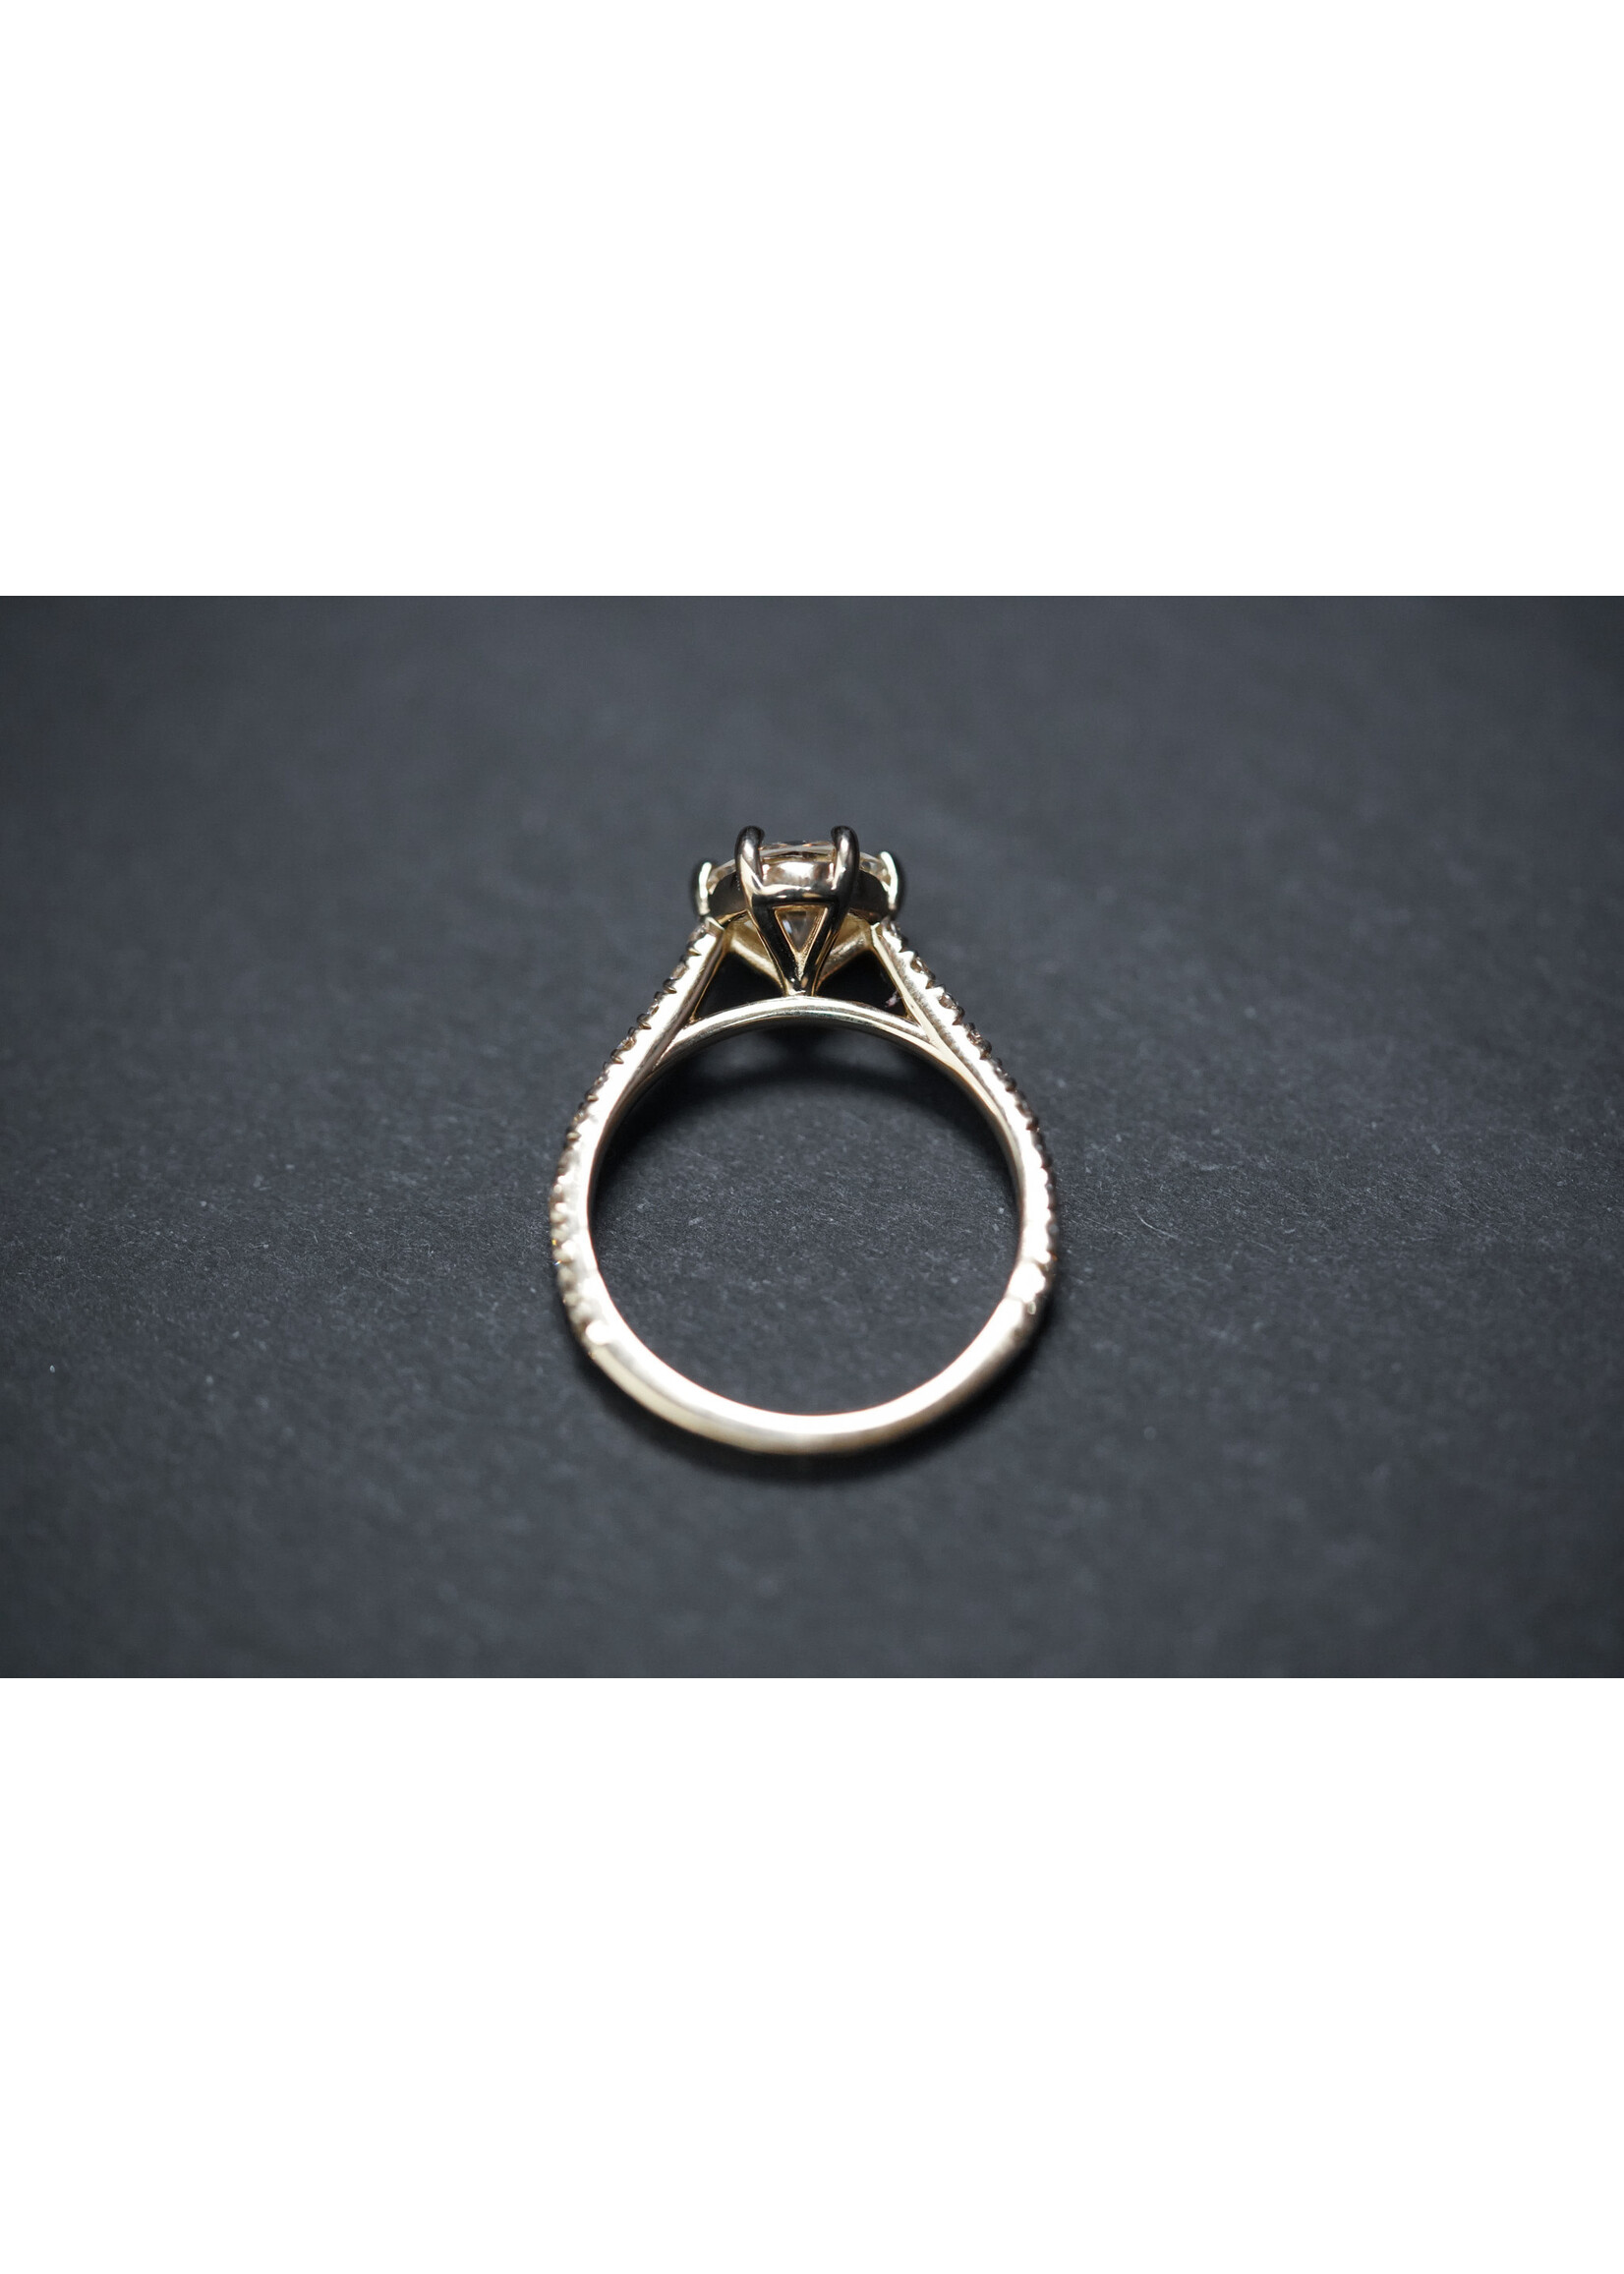 14KY 3.11g 2.04ctw (1.52ctr) K/VS2 Round Diamond Engagement Ring (size 7)